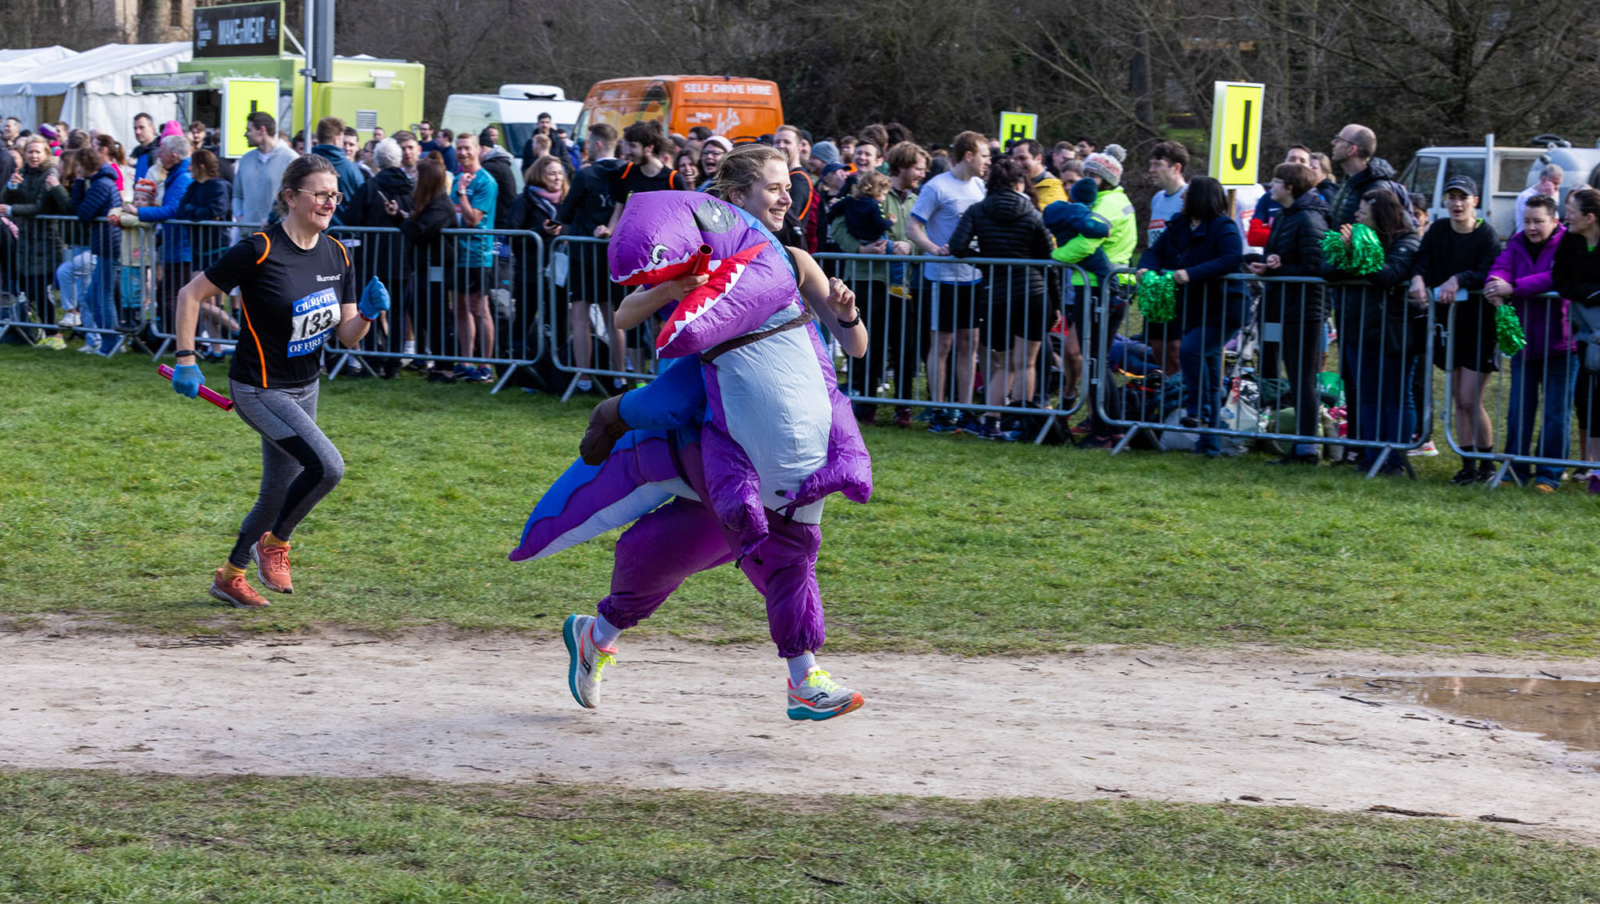 A relay race runner wearing a dinosaur costume